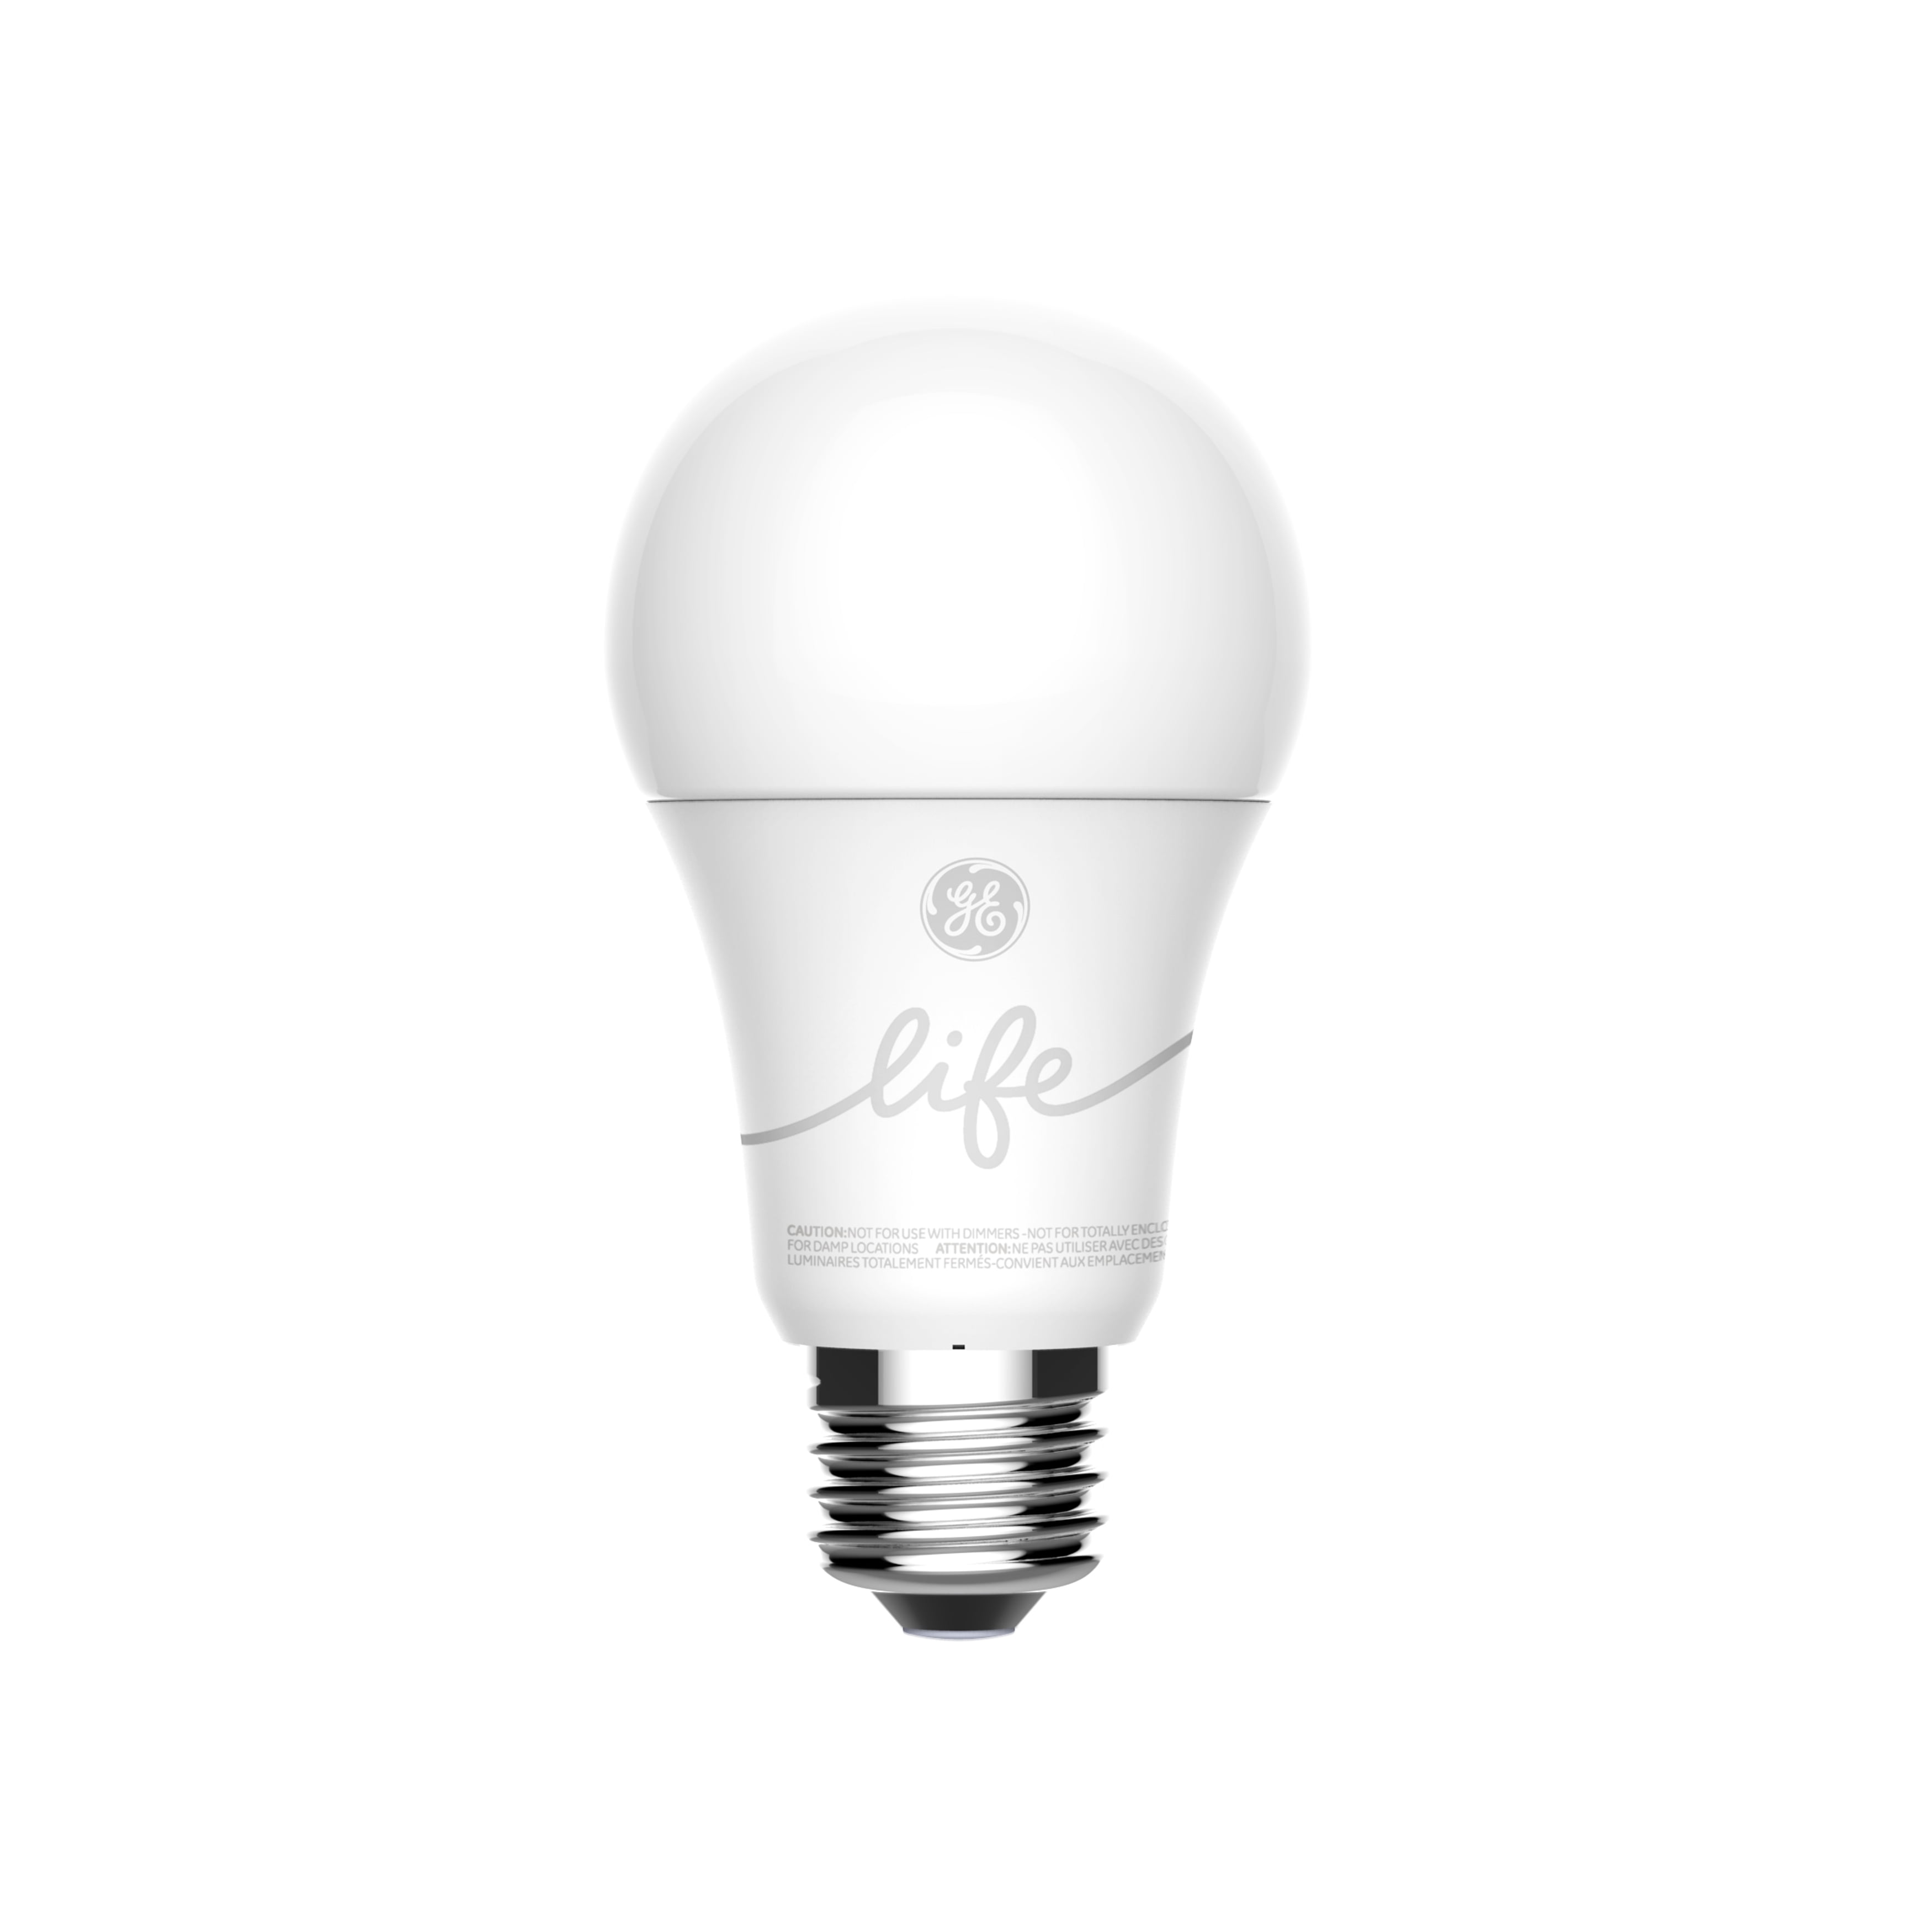 Google Smart Light Starter Kit - Google Home Mini and GE C-Life Light Bulb - Walmart.com